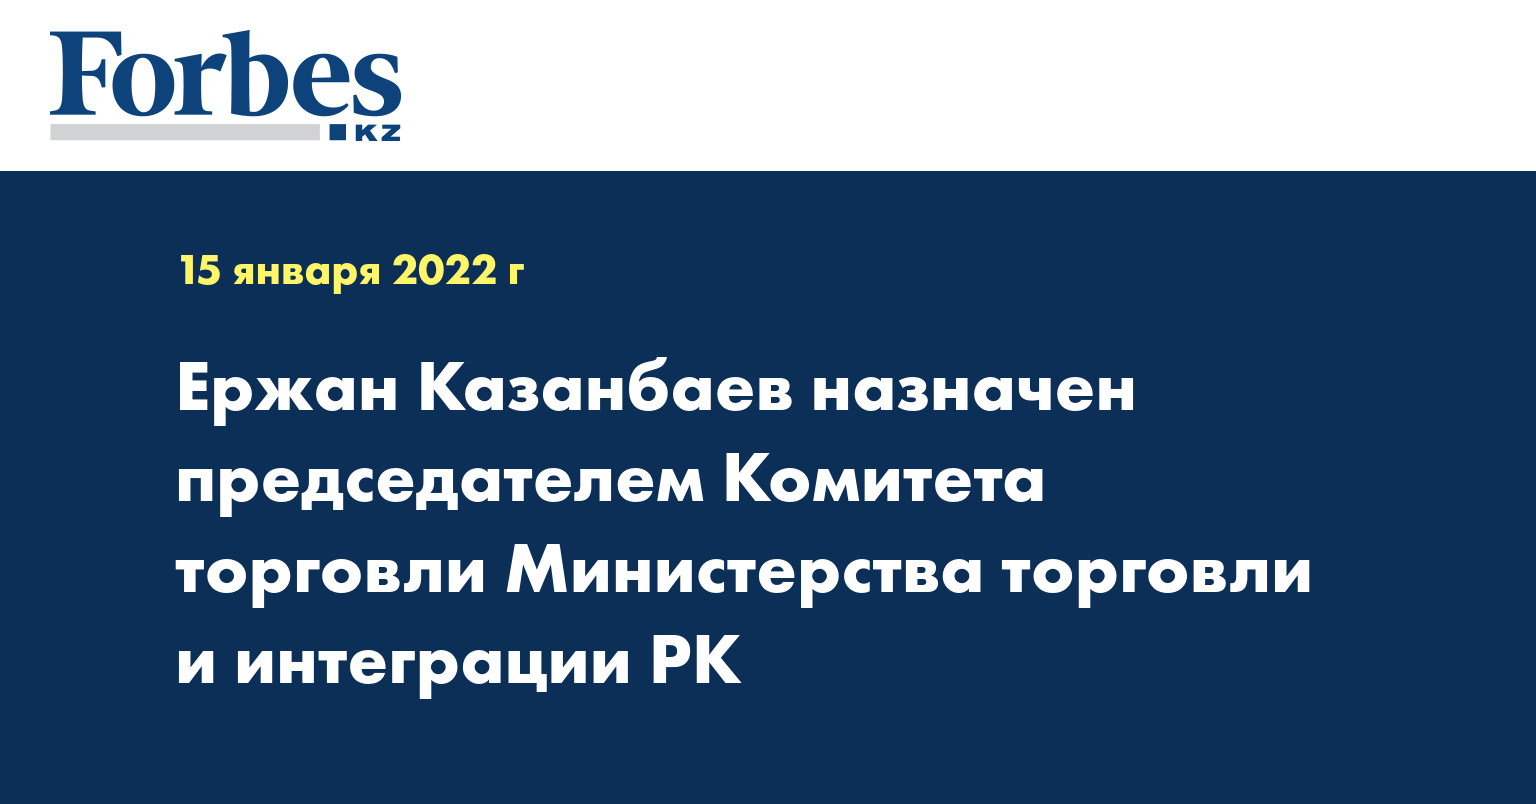 Ержан Казанбаев назначен председателем Комитета торговли Министерства торговли и интеграции РК